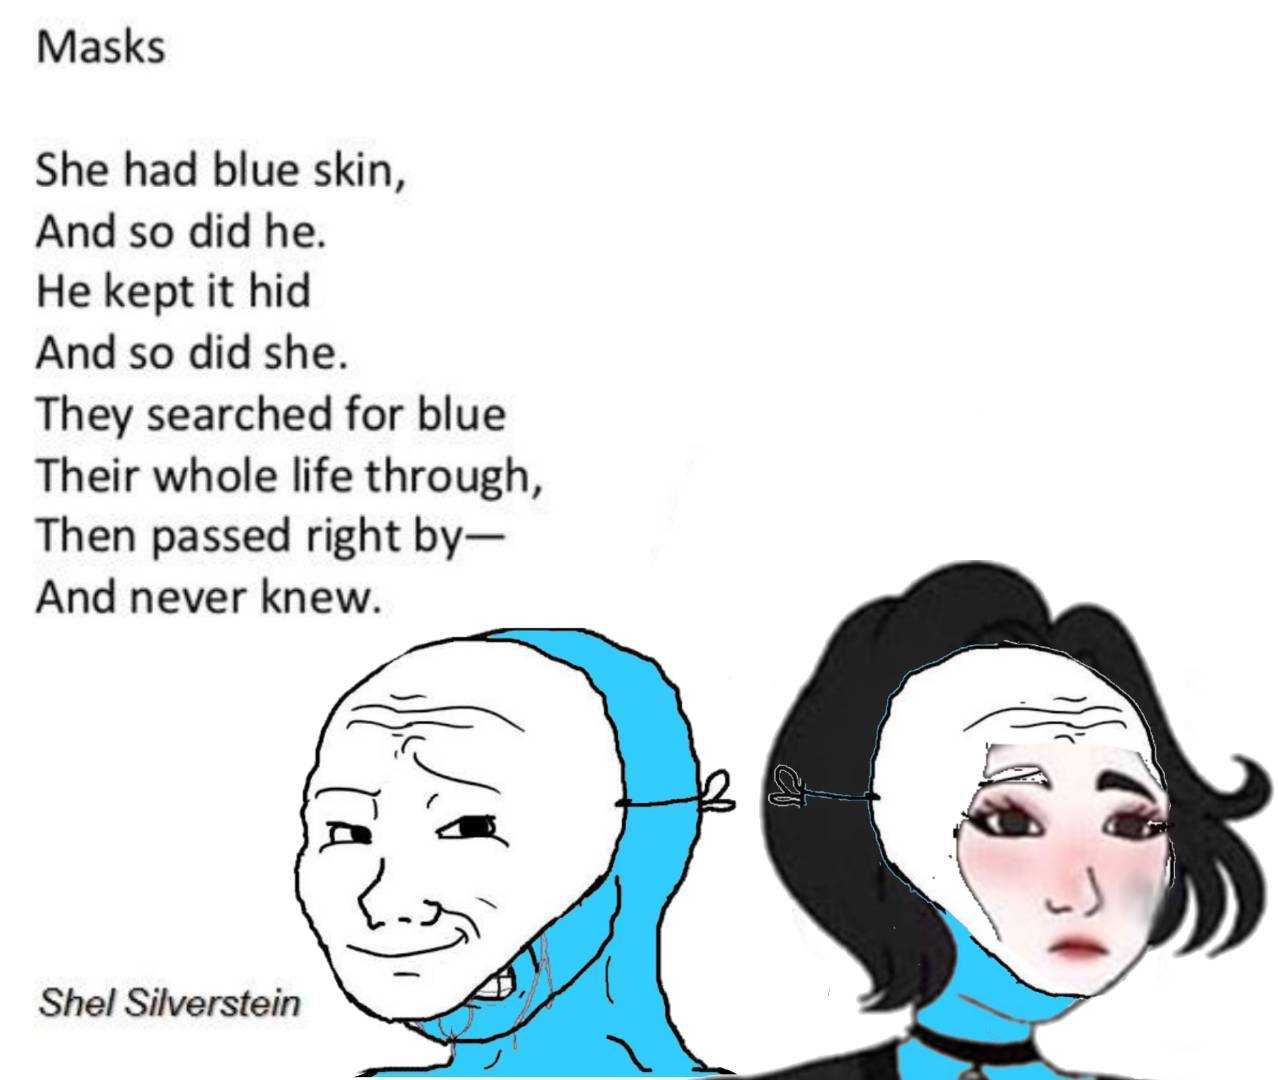 Meme'd a poem | Scrolller